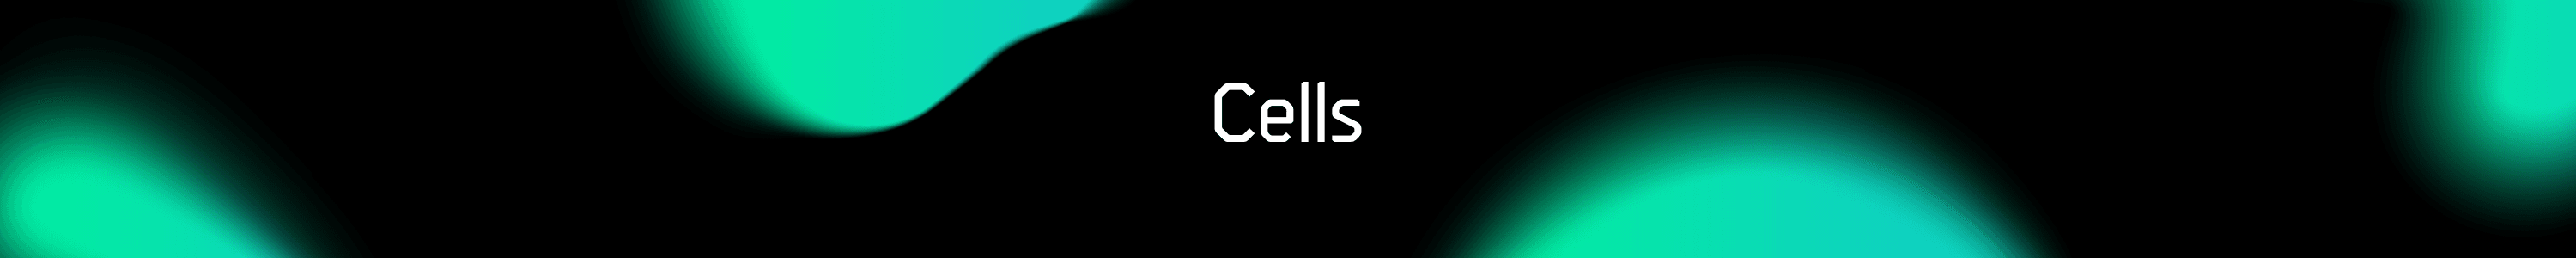 CellsNFT 横幅